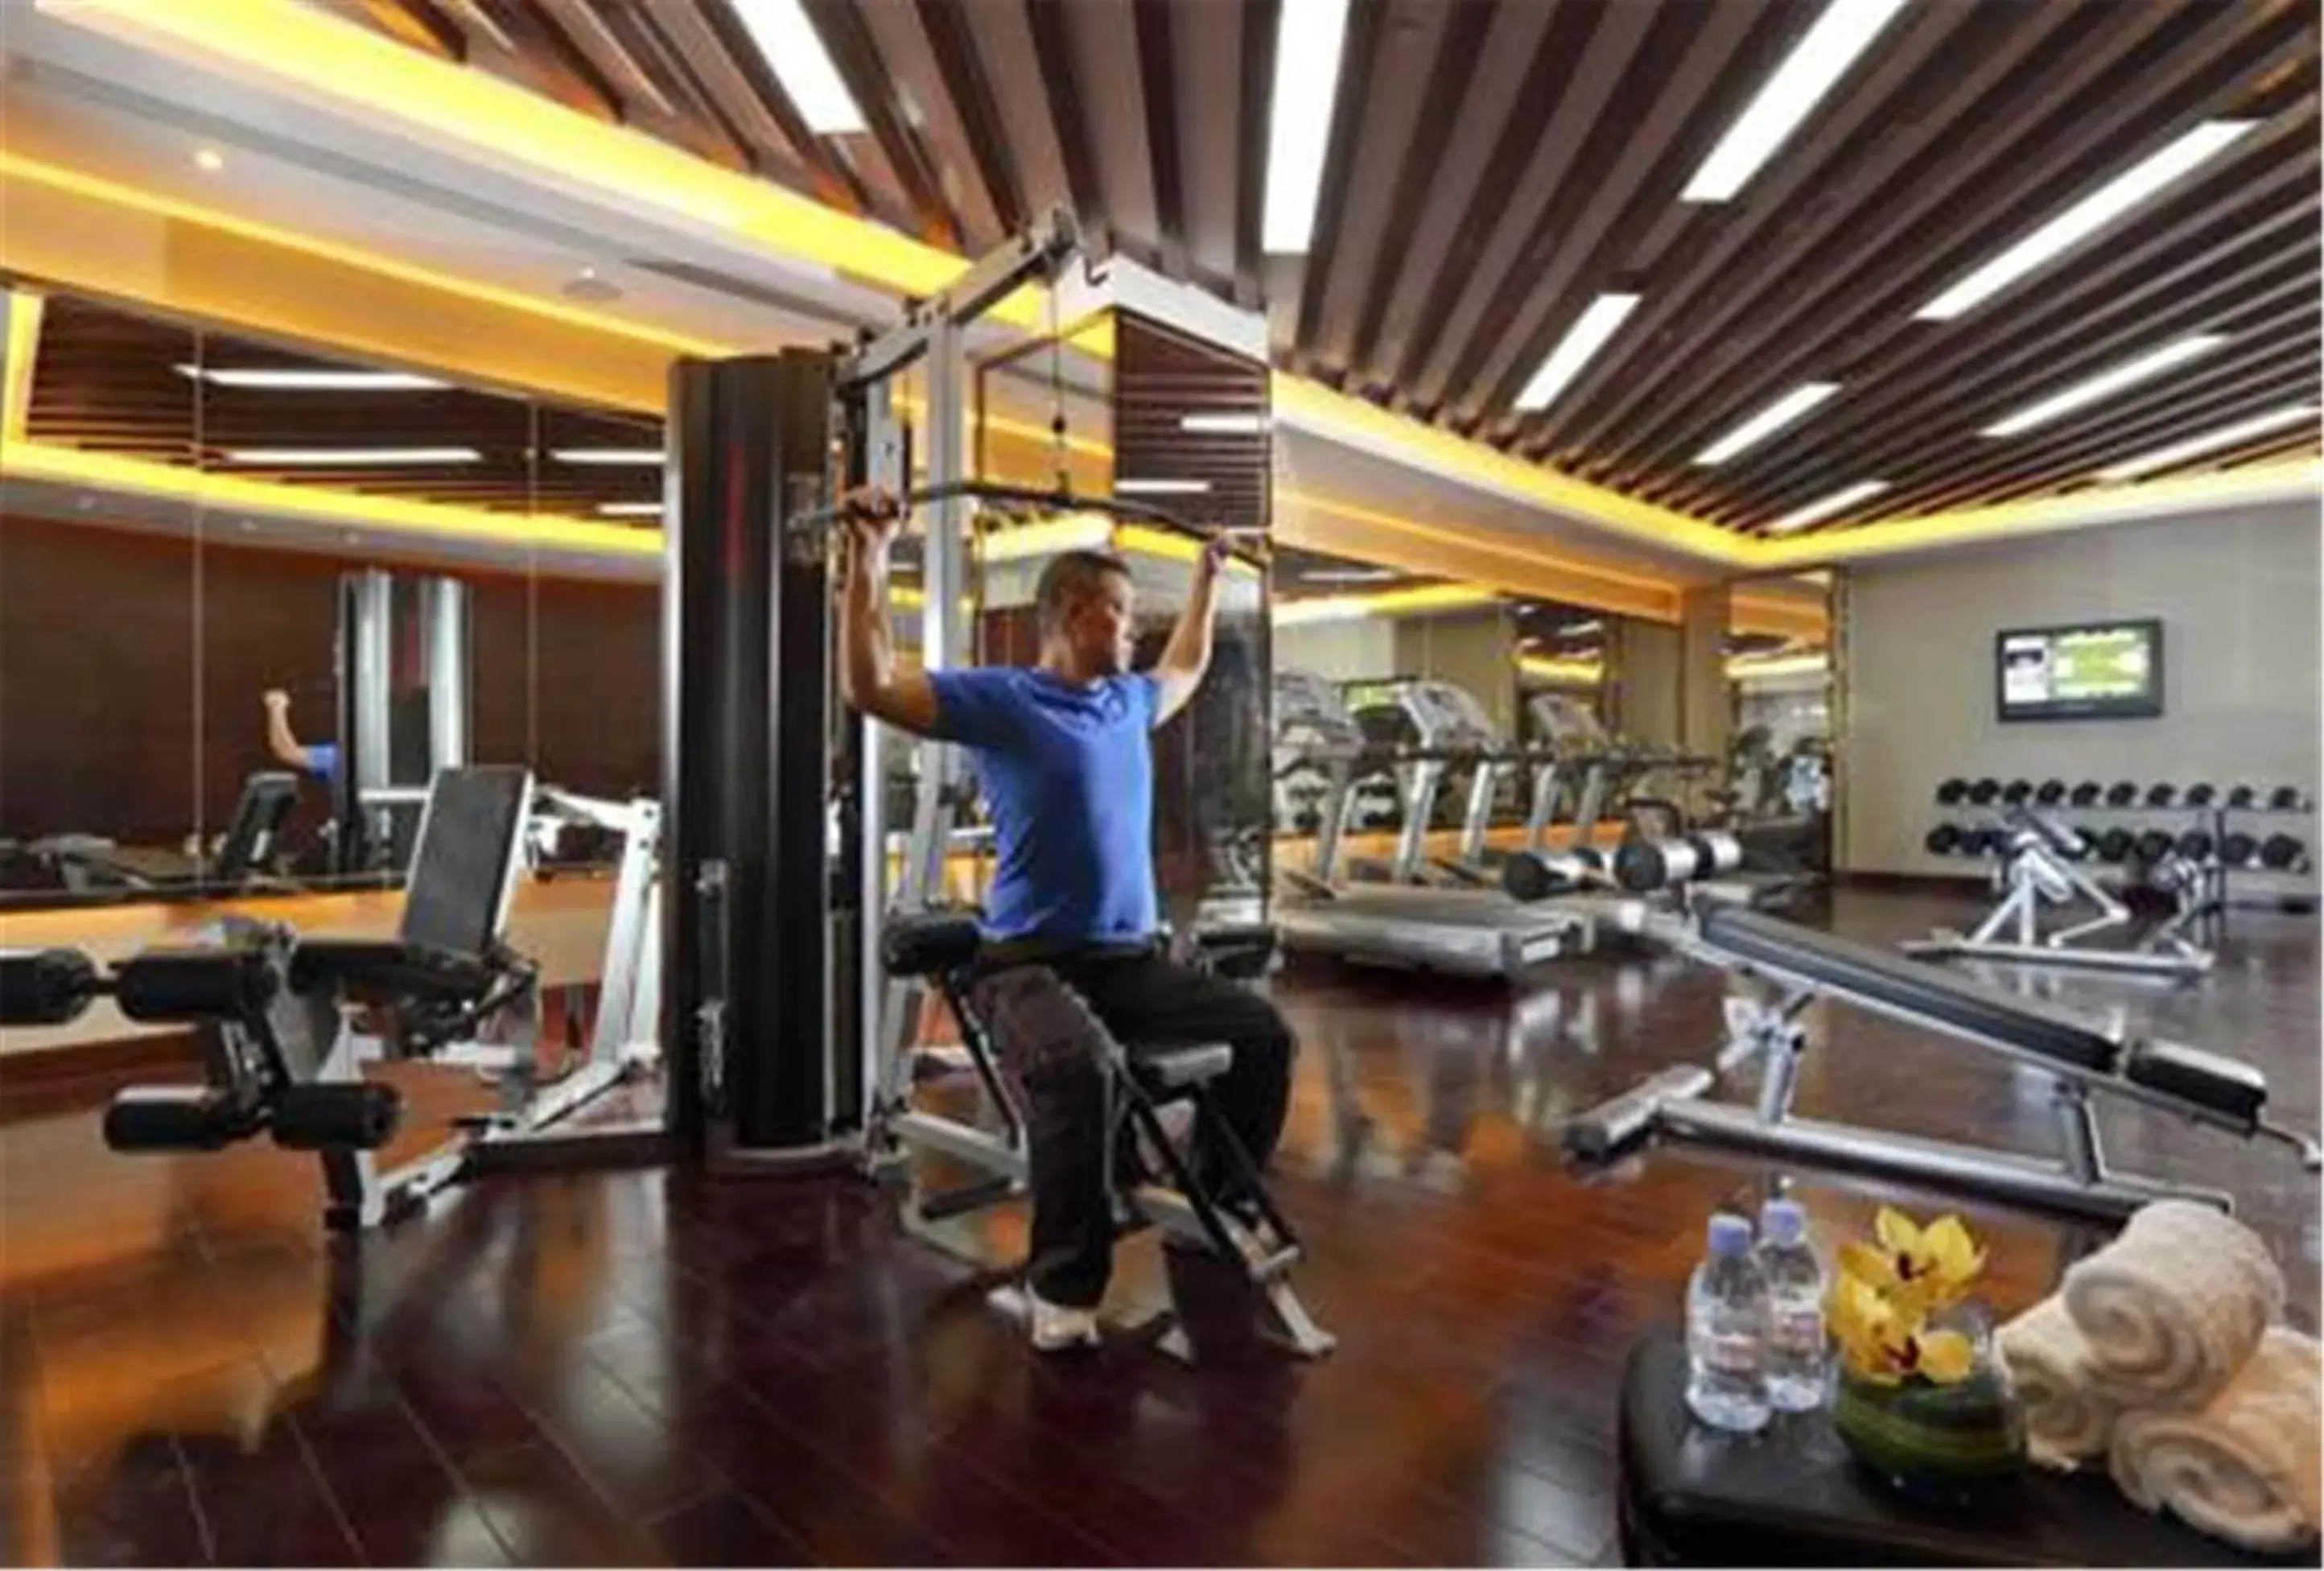 Fitness centre/facilities, Fitness Center/Facilities in Royal International Hotel